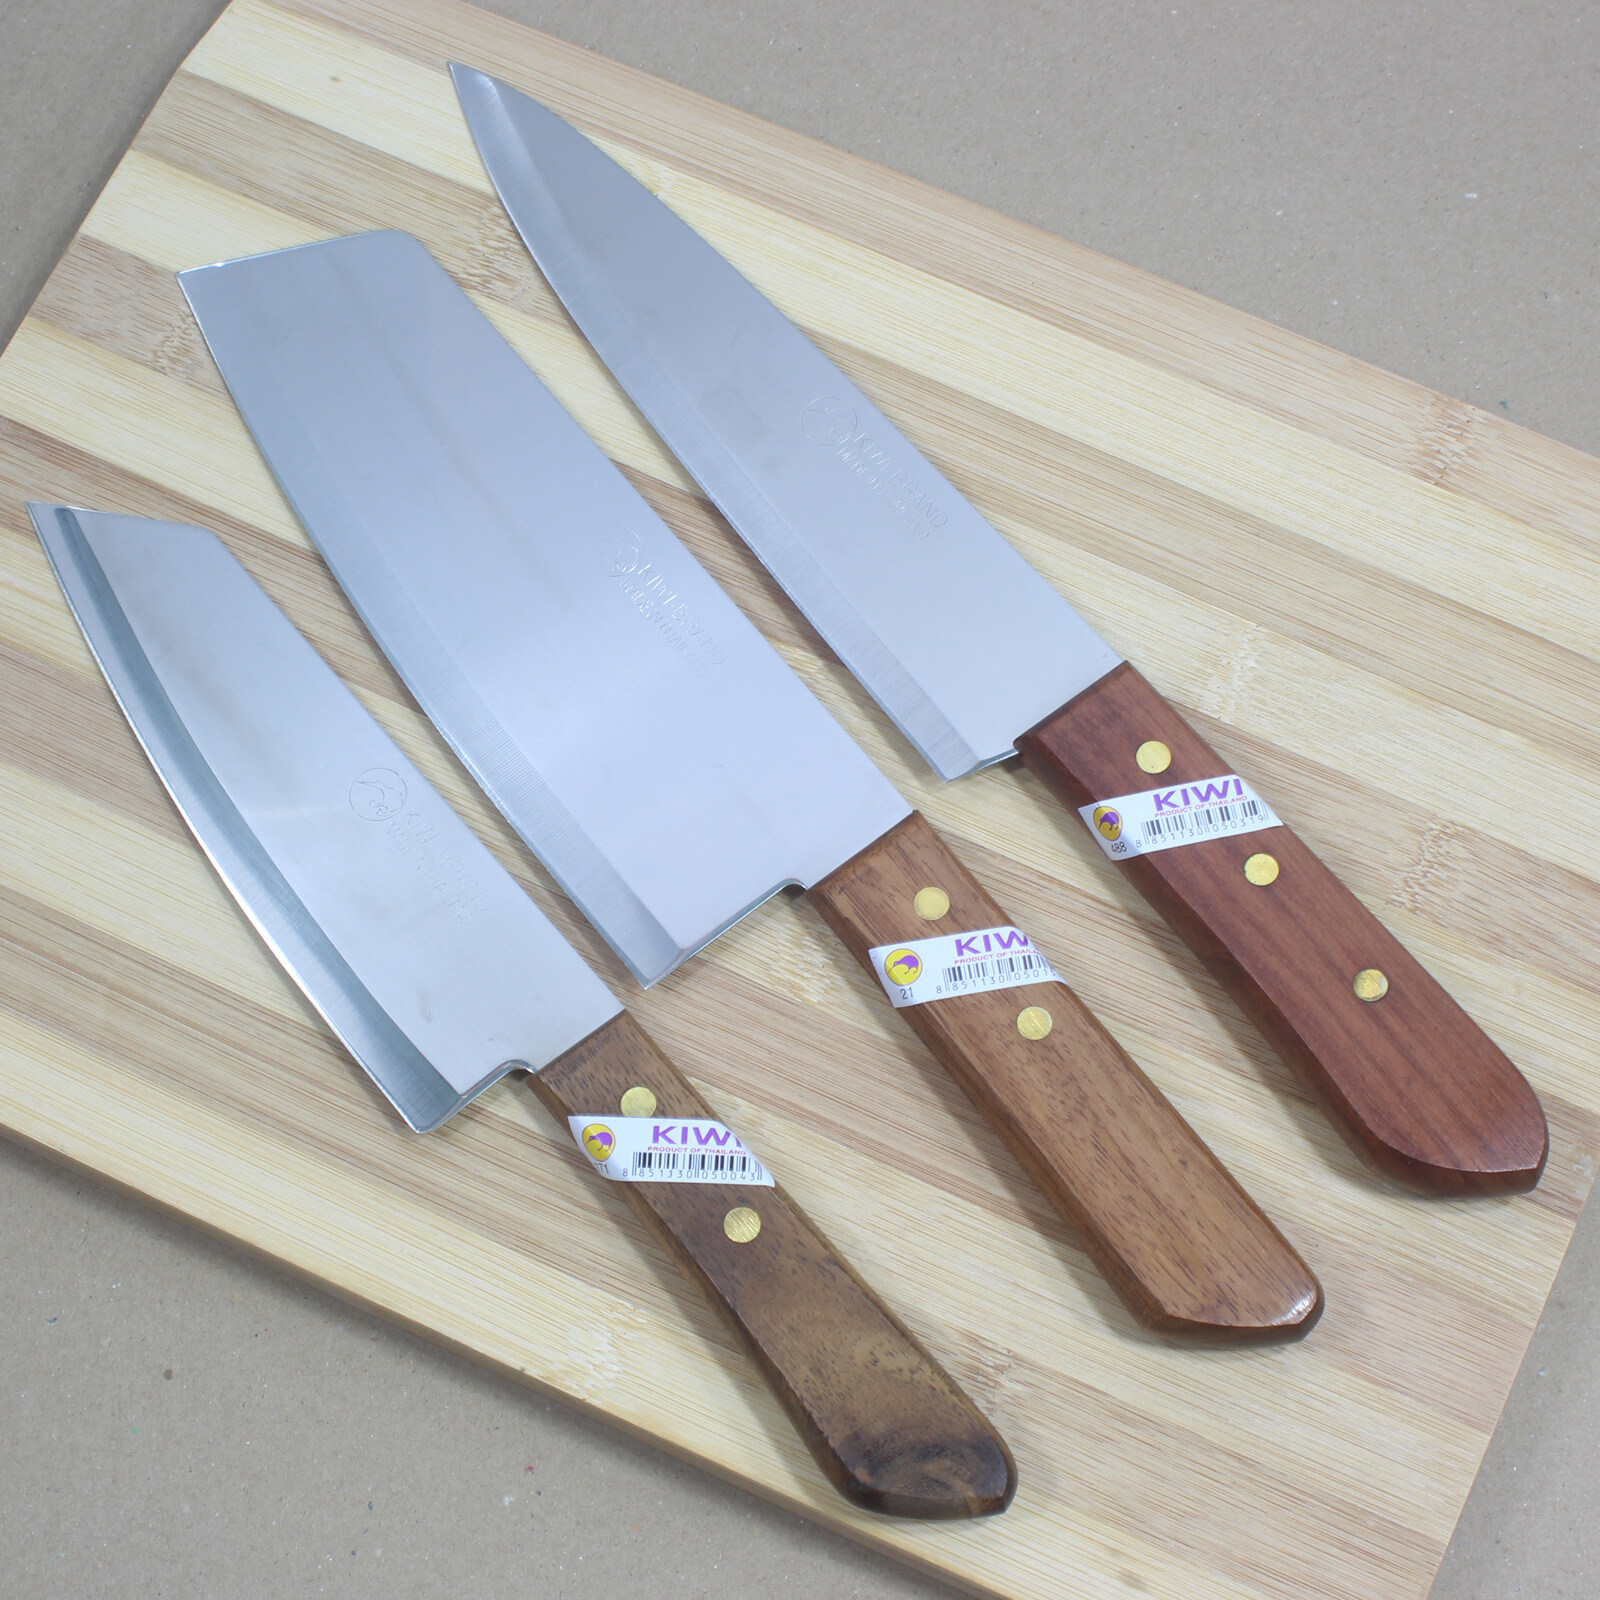 Kiwi Knife 8 Inches #288